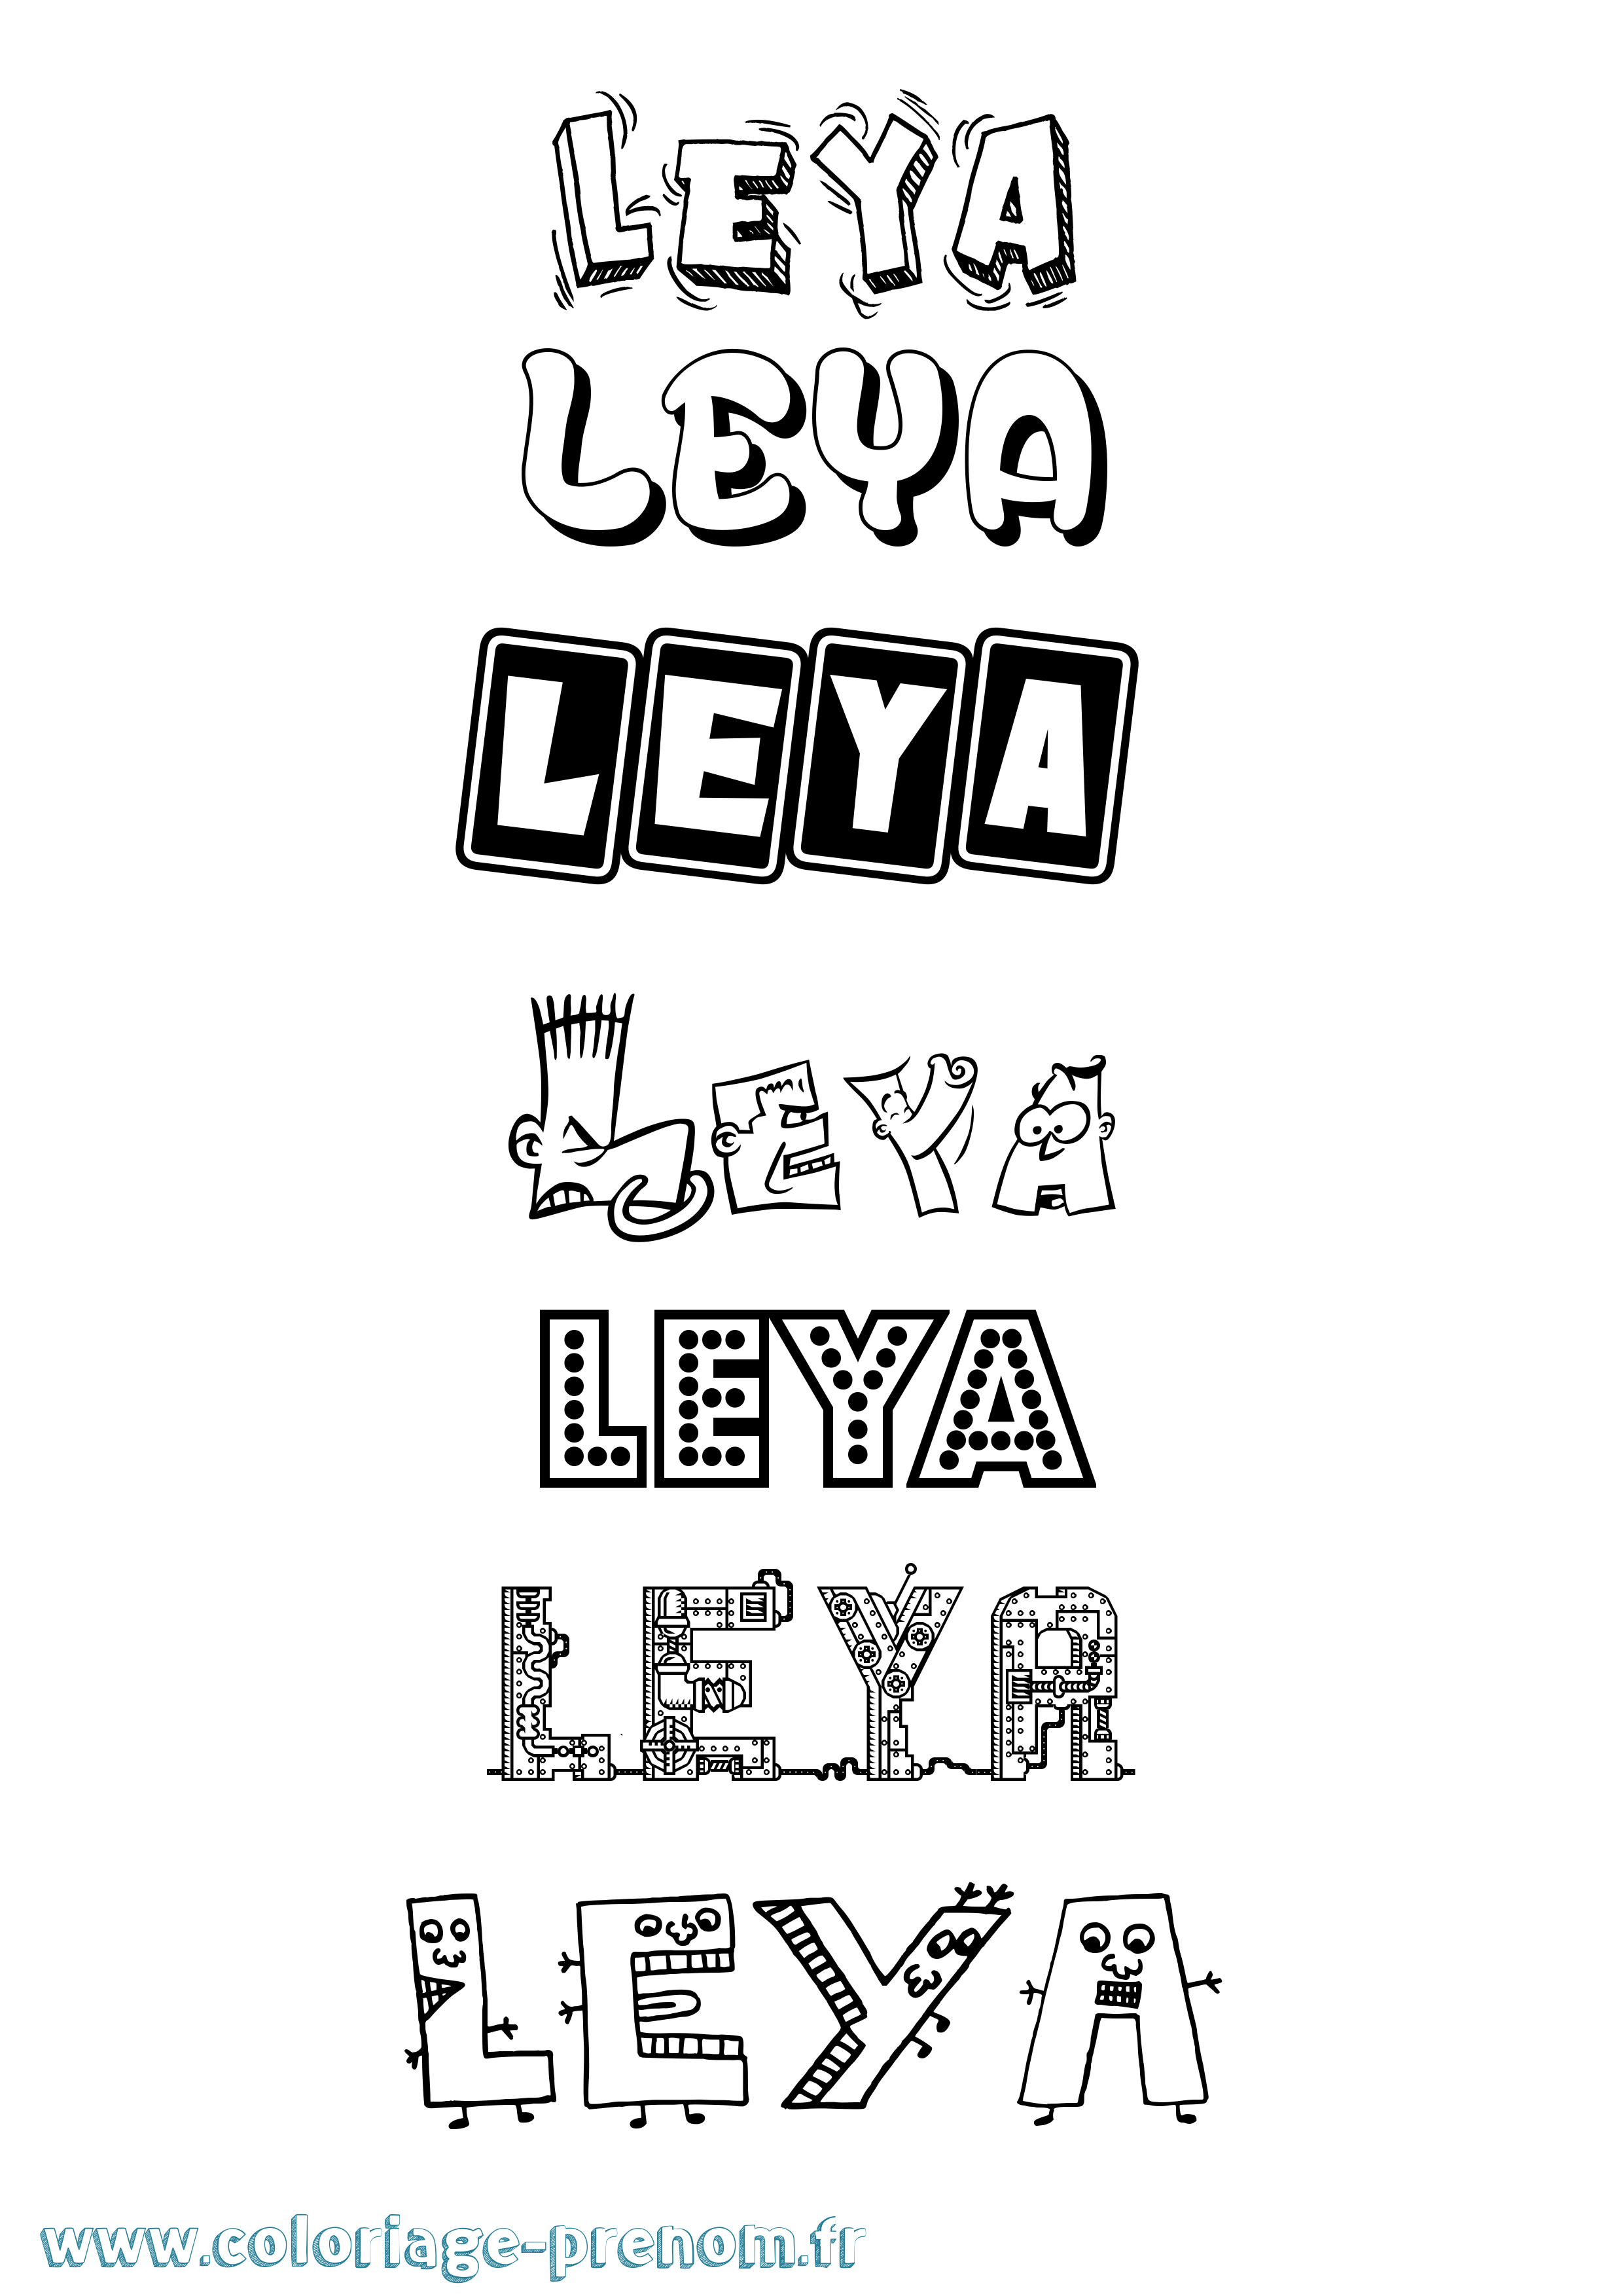 Coloriage prénom Leya Fun